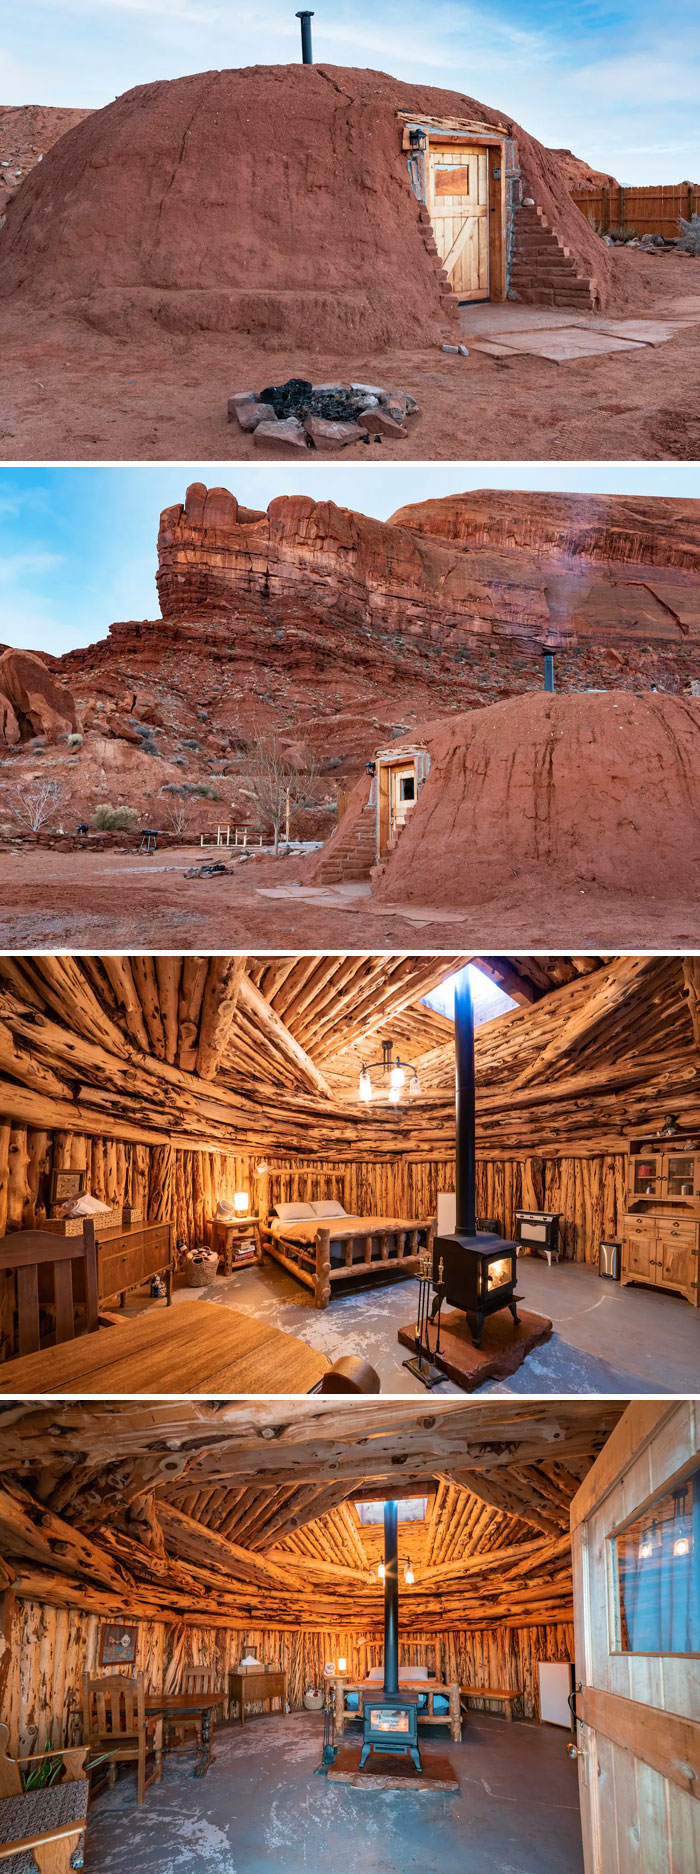 Traditional Navajo Home. Oljato-Monument Valley, Utah, United States